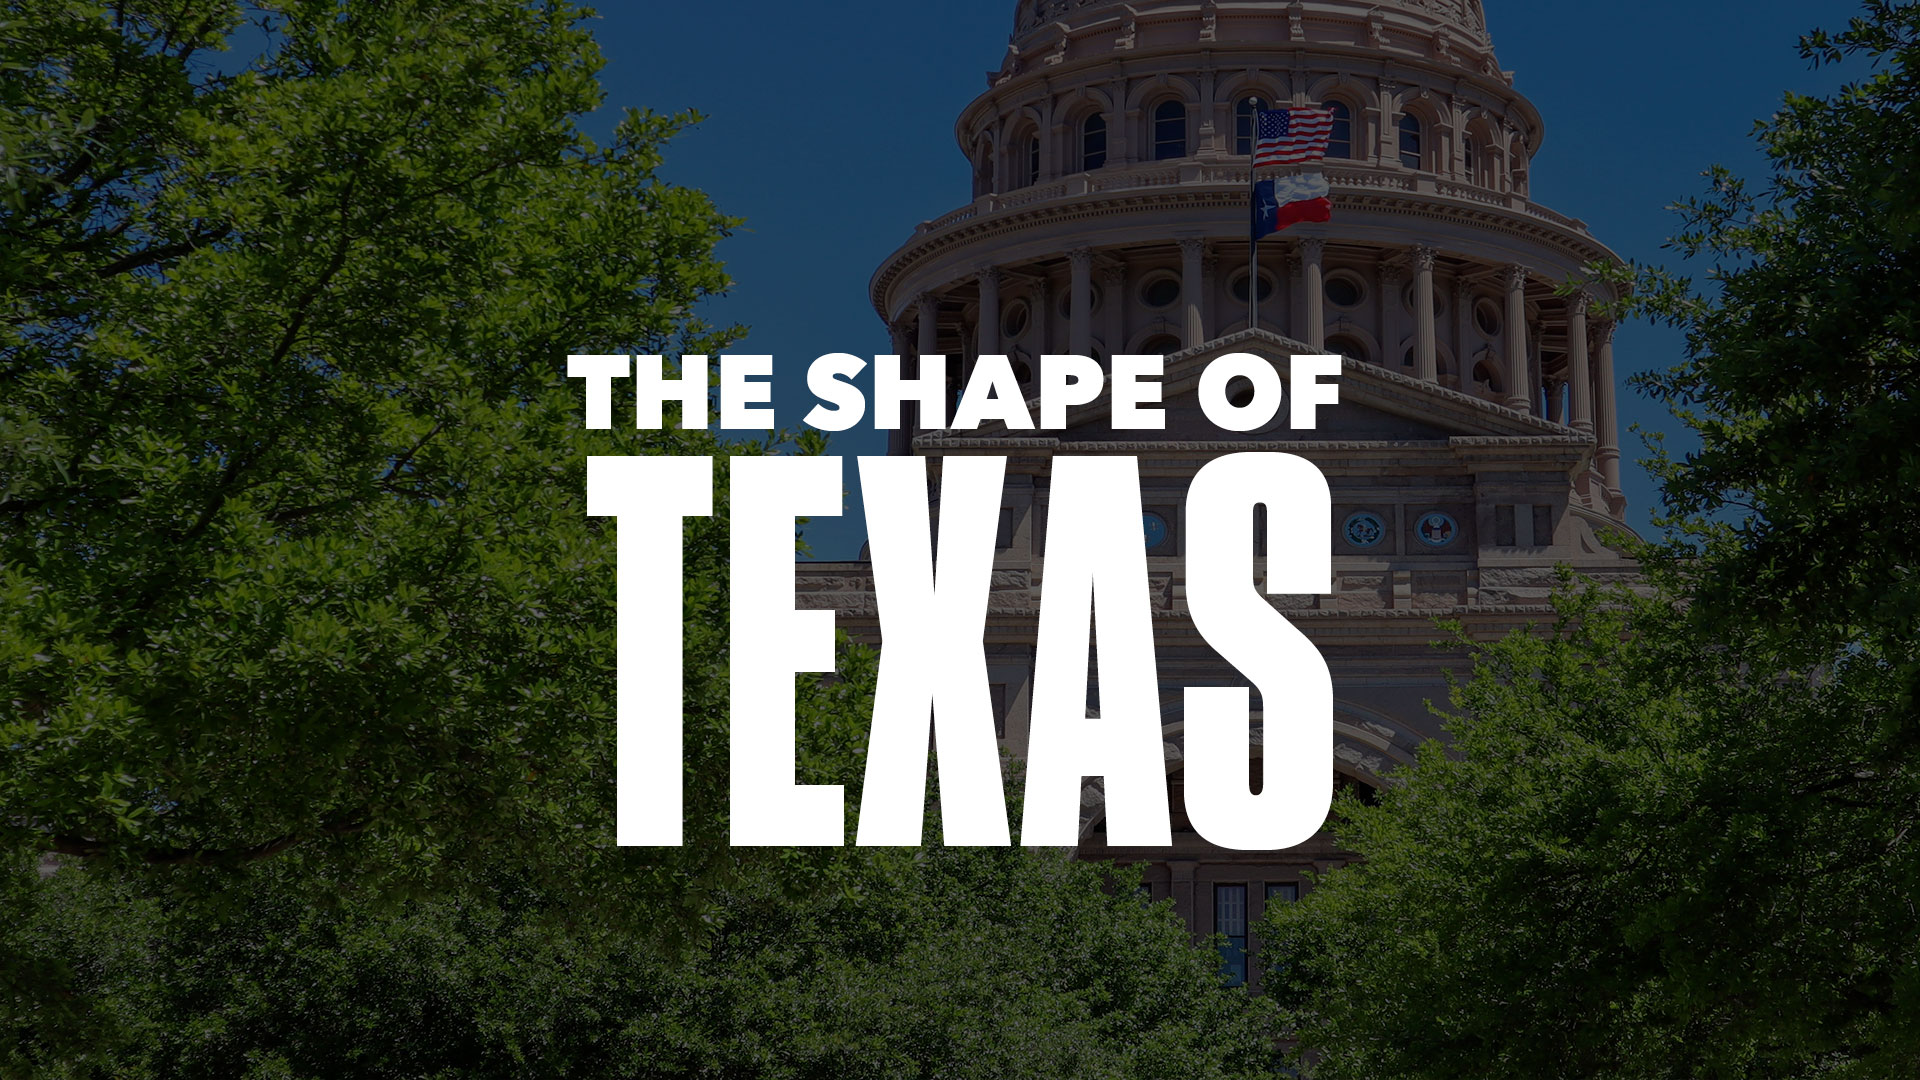 The Shape of Texas